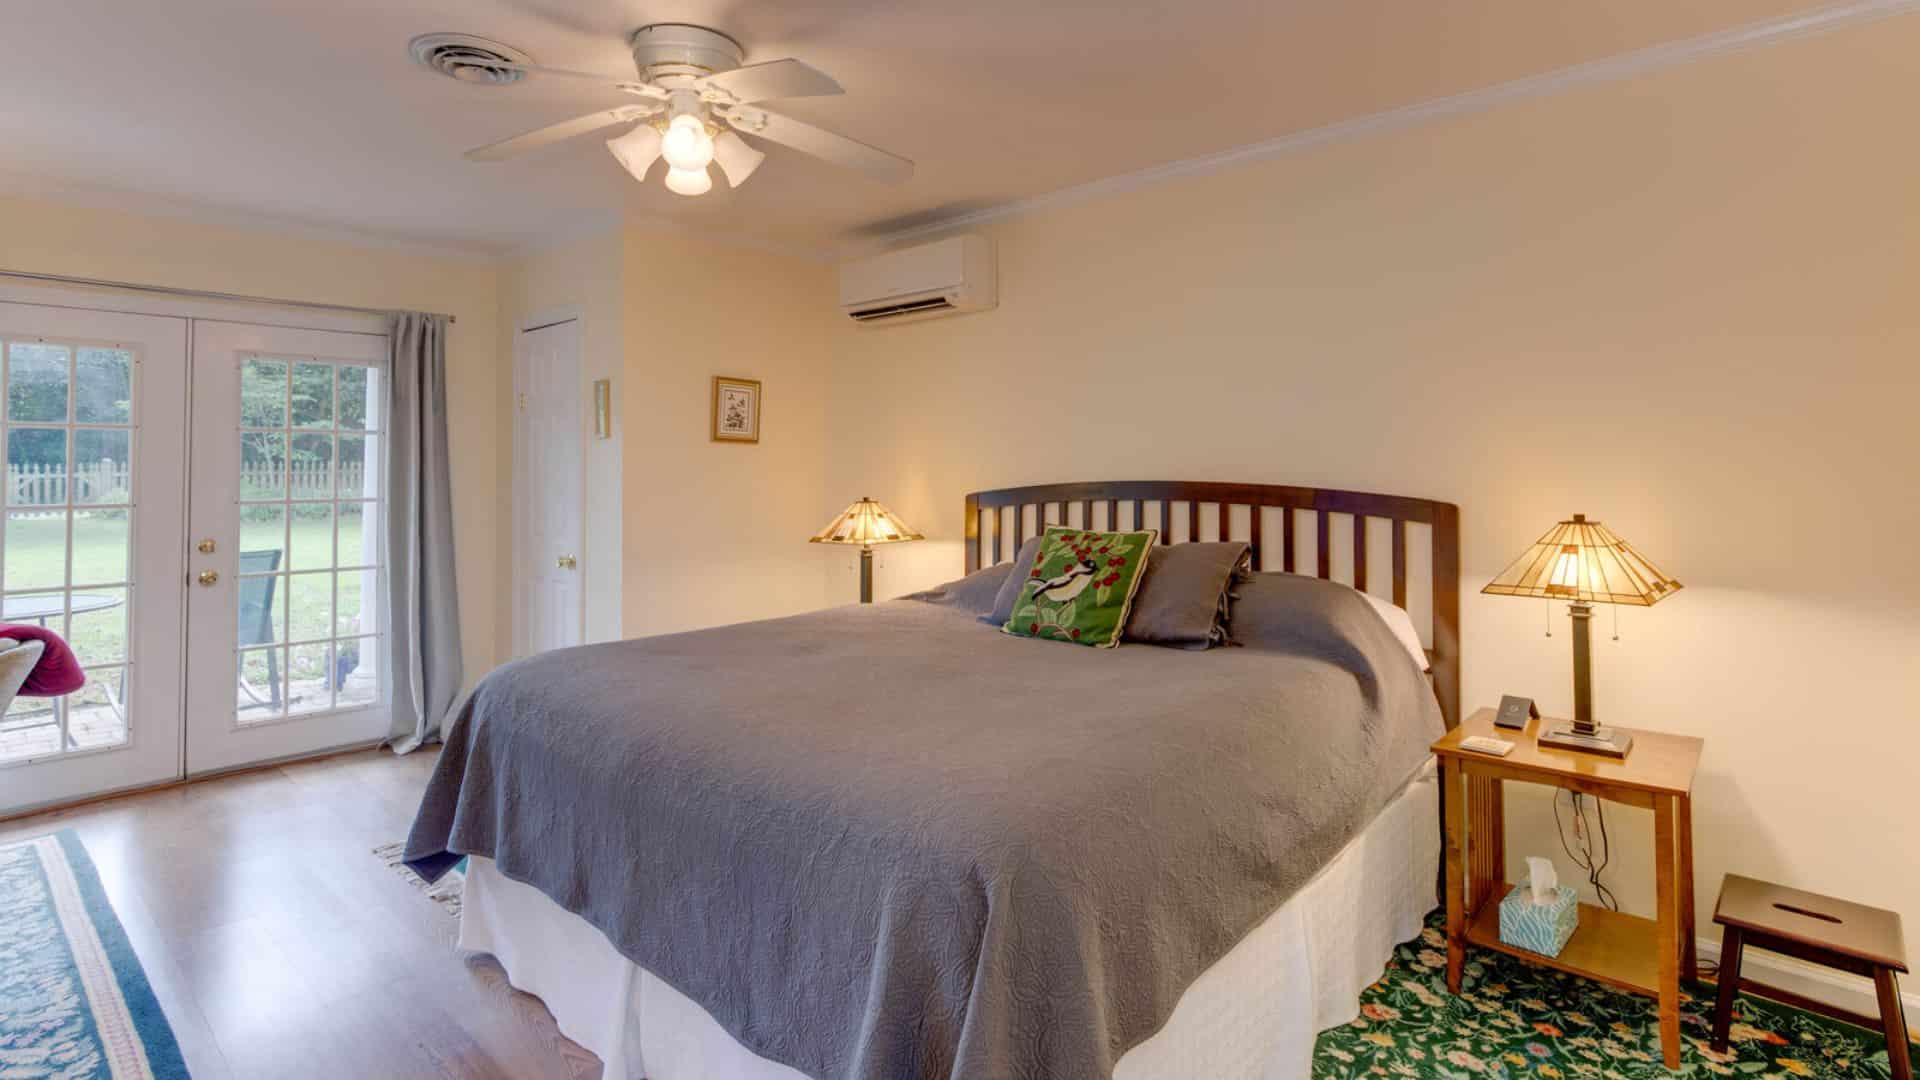 Suite with cream walls, hardwood flooring, wood headboard, gray bedding, and double doors to back patio